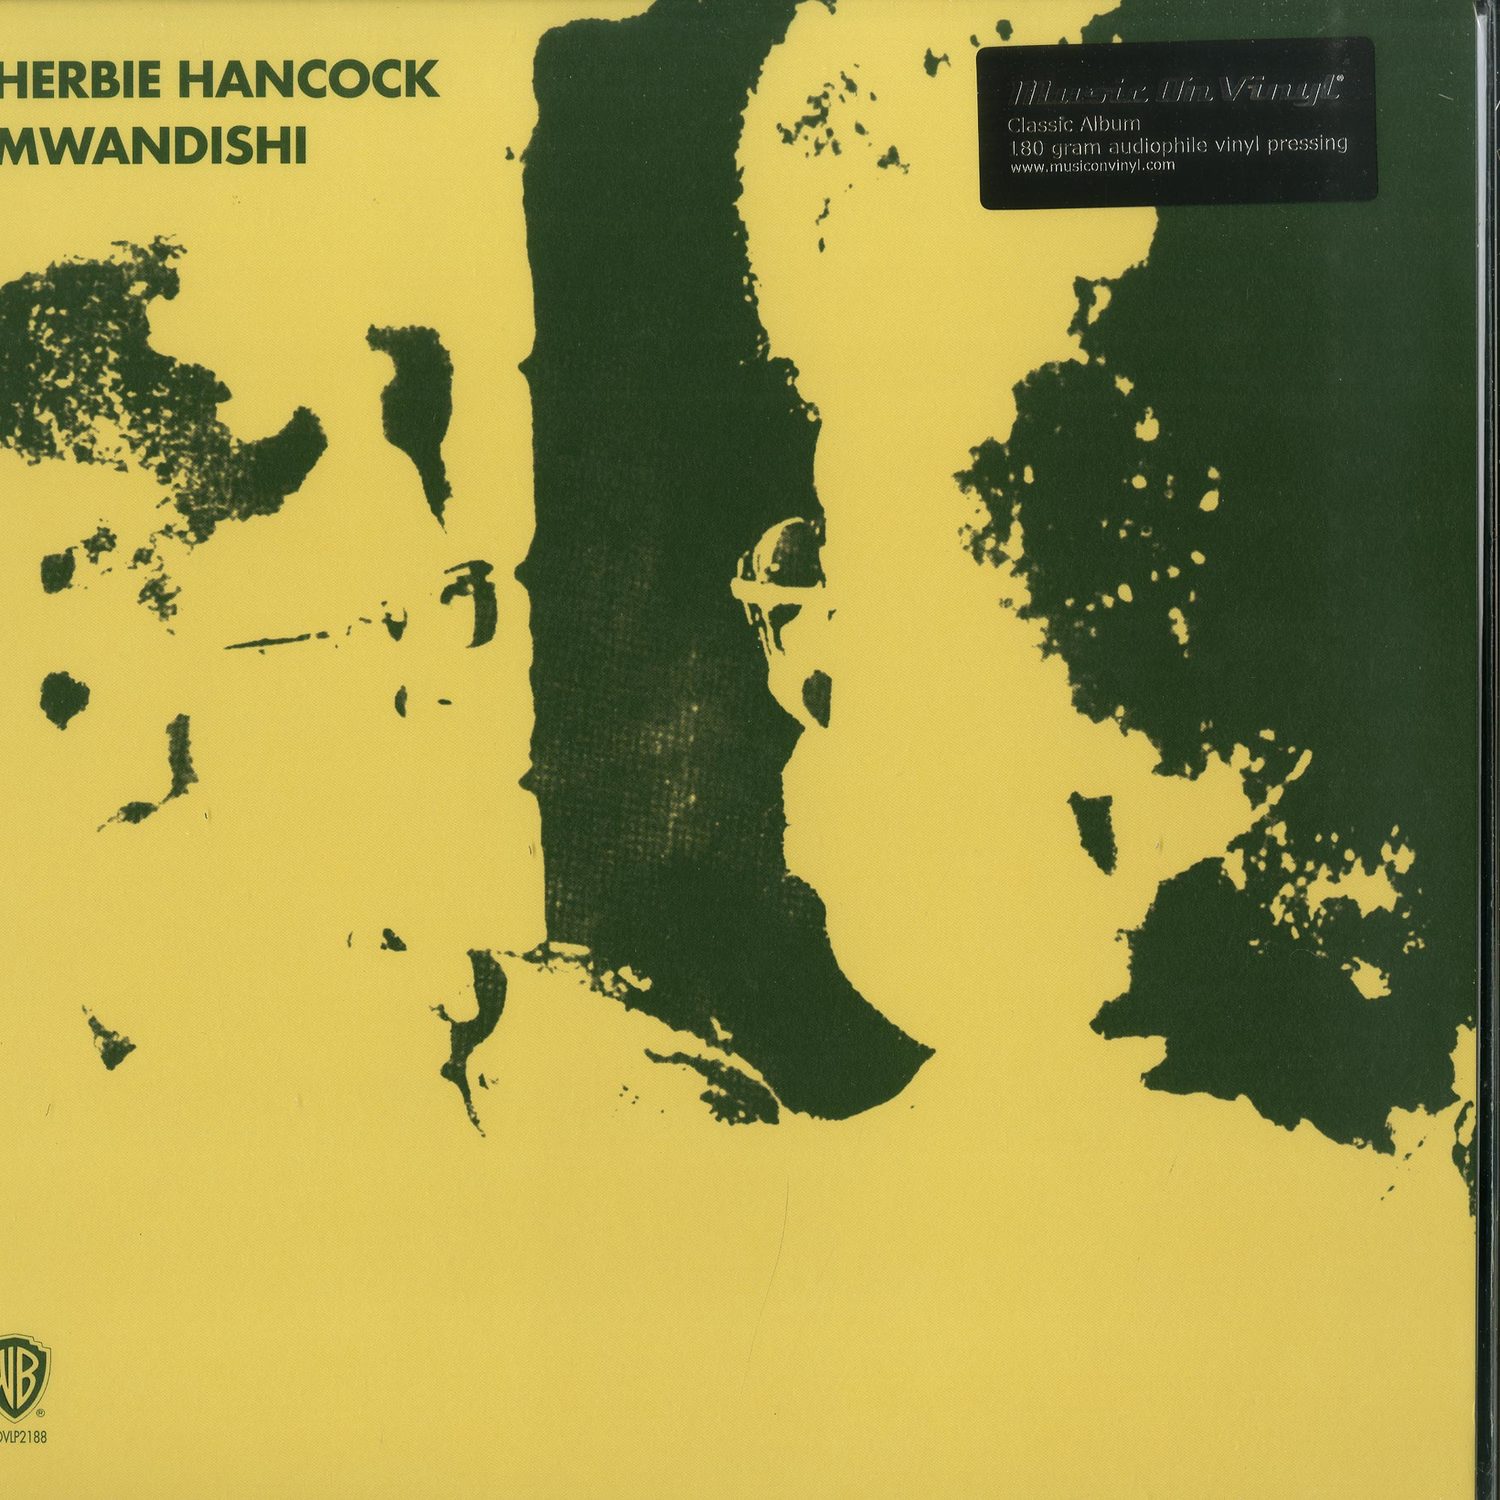 Herbie Hancock - MWANDISHI 